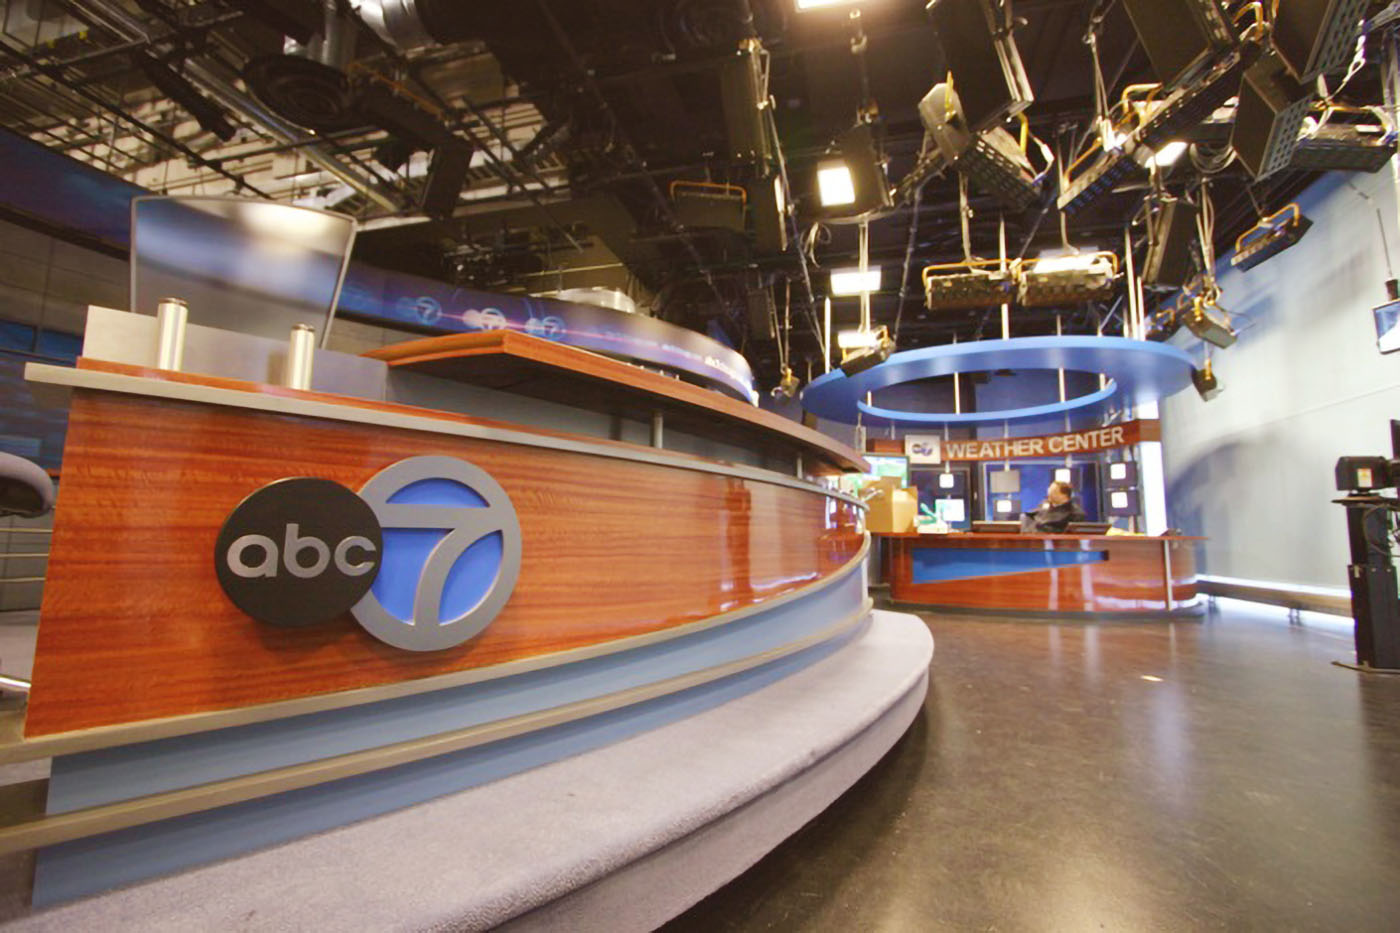 Main News room ABC 7